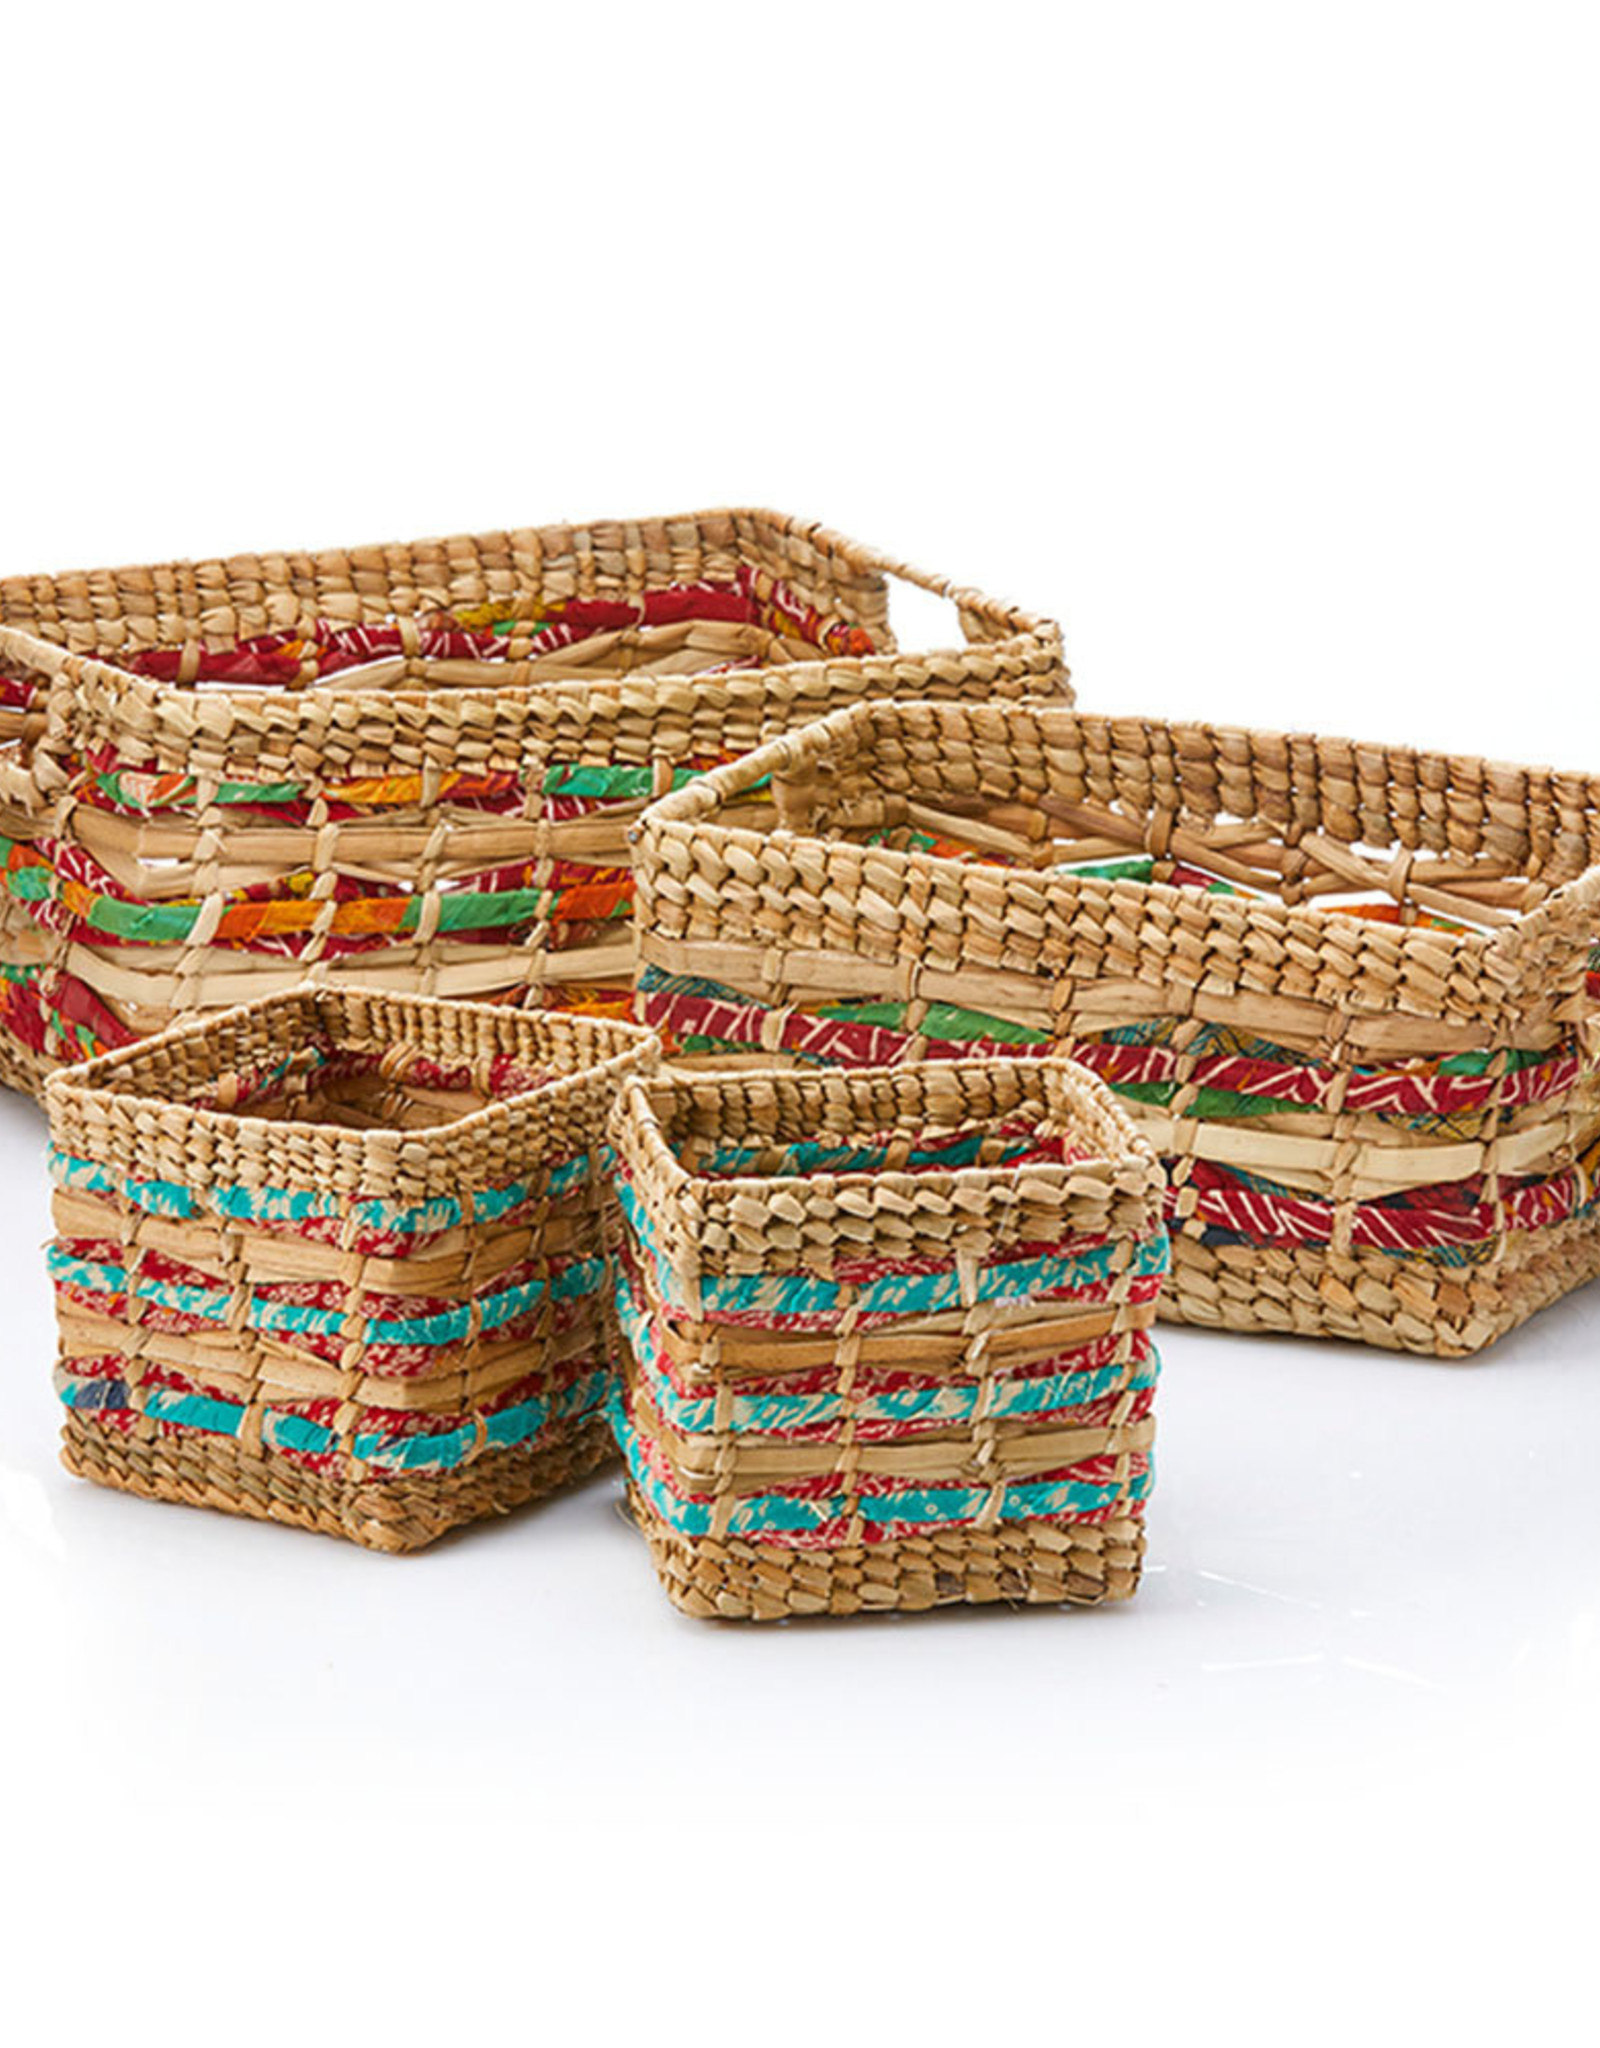 https://cdn.shoplightspeed.com/shops/639902/files/42351164/1600x2048x1/serrv-katra-sari-nesting-storage-baskets-small.jpg